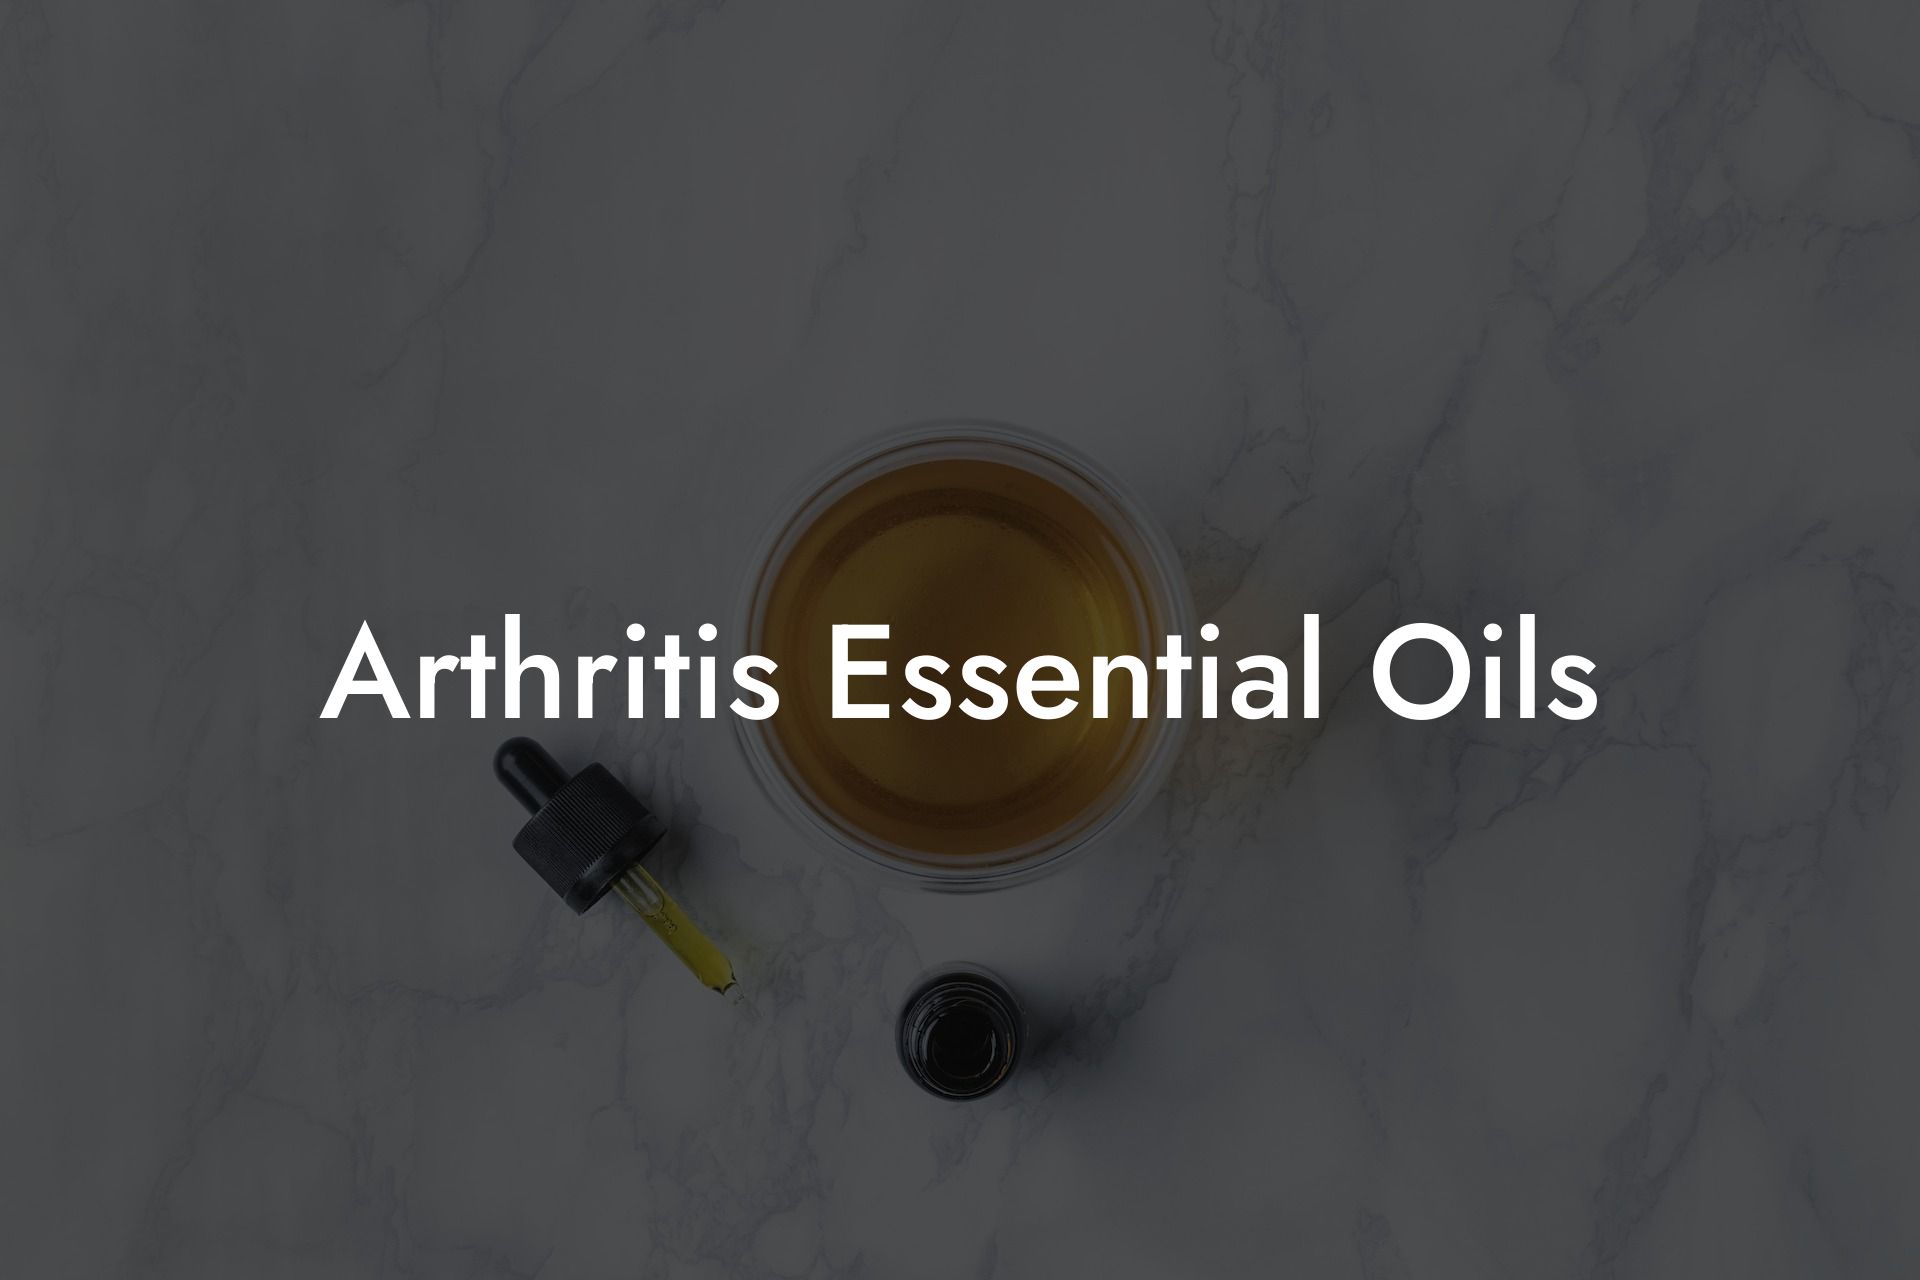 Arthritis Essential Oils